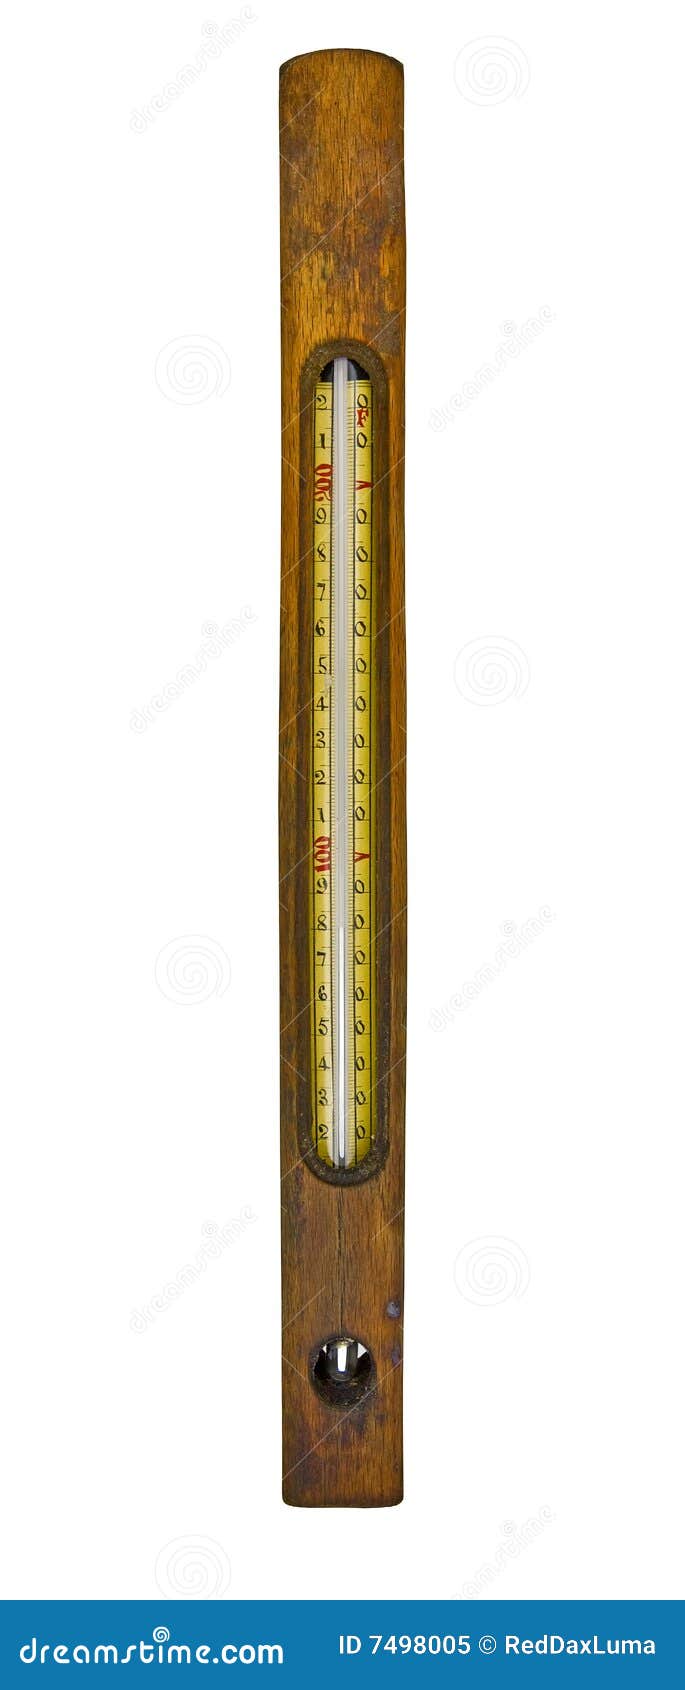 https://thumbs.dreamstime.com/z/vintage-floating-thermometer-7498005.jpg